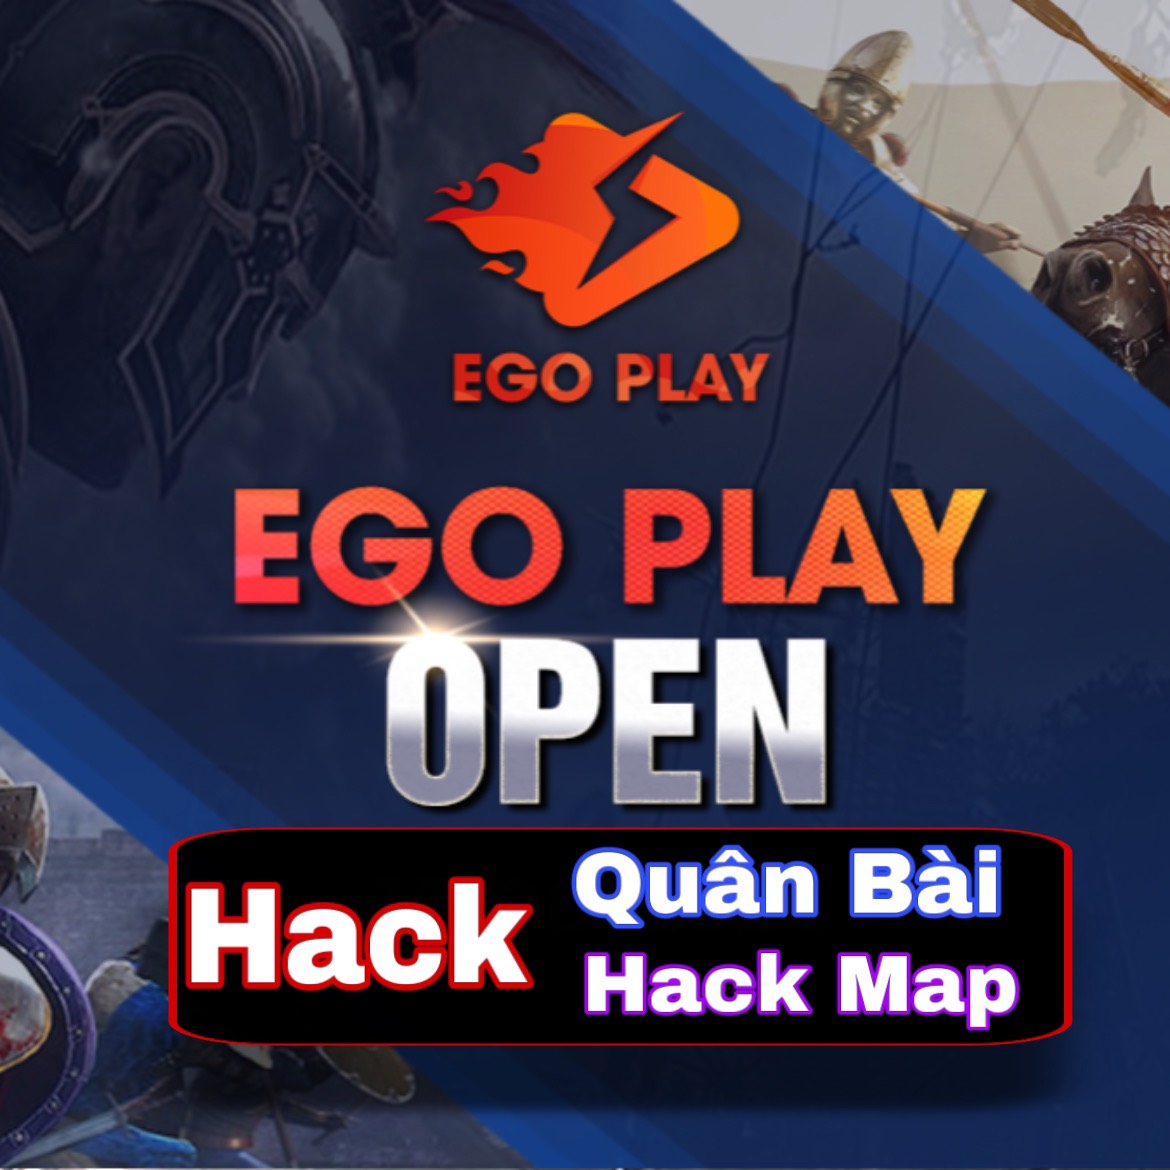 Hack EGO Play, hack map aoe